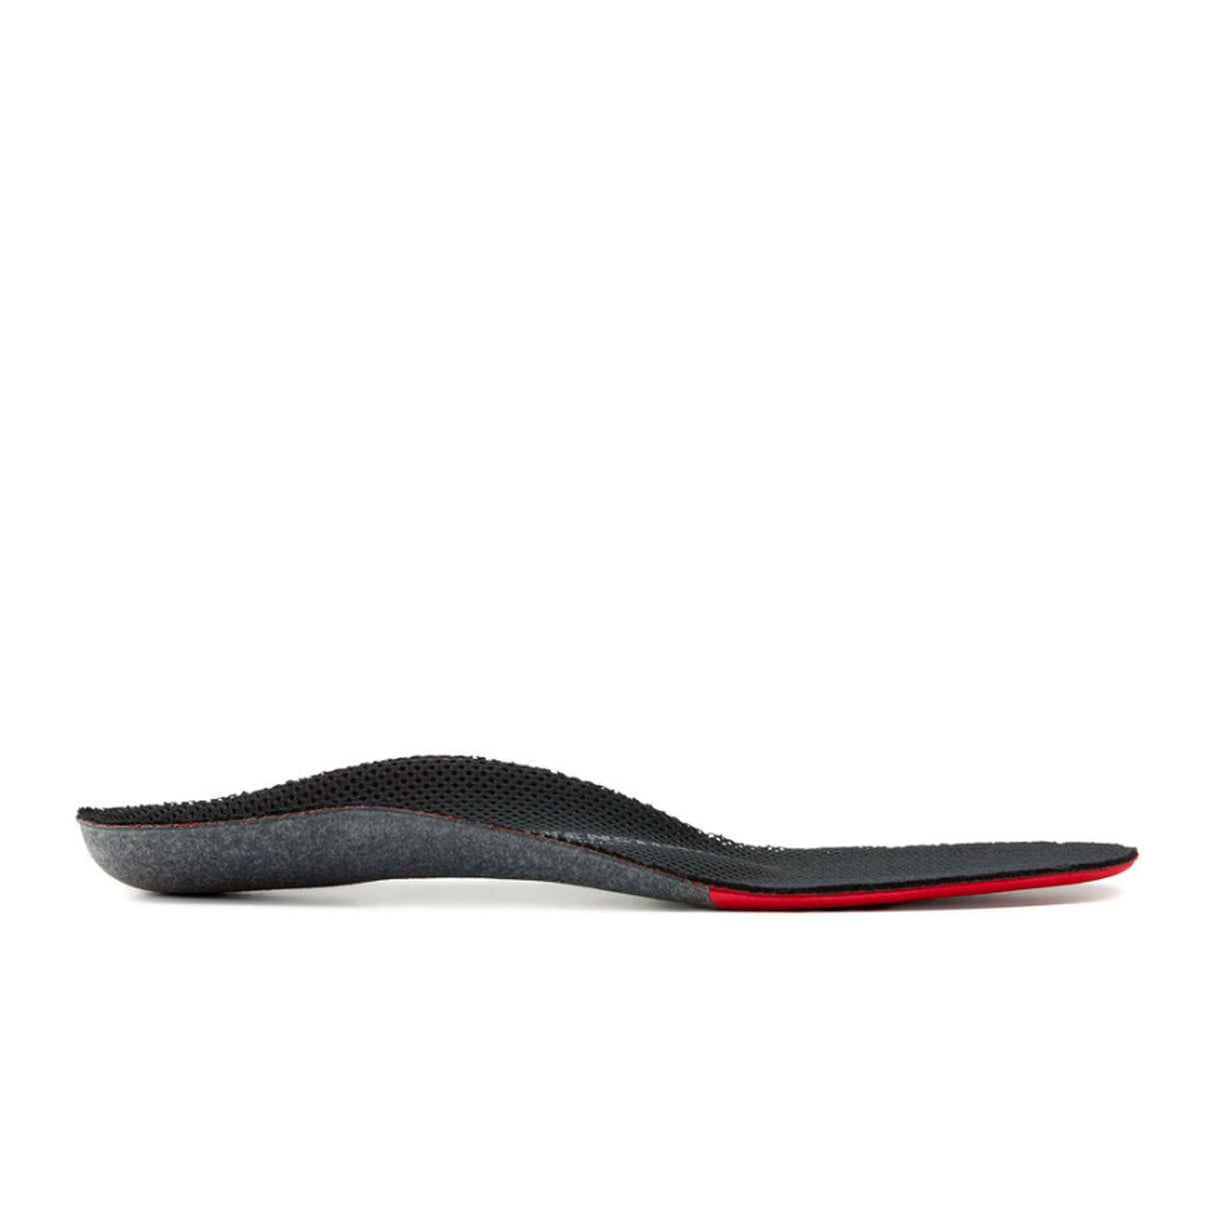 Birkenstock Birko Active Footbed (Unisex) - Black Accessories - Orthotics/Insoles - Full Length - The Heel Shoe Fitters